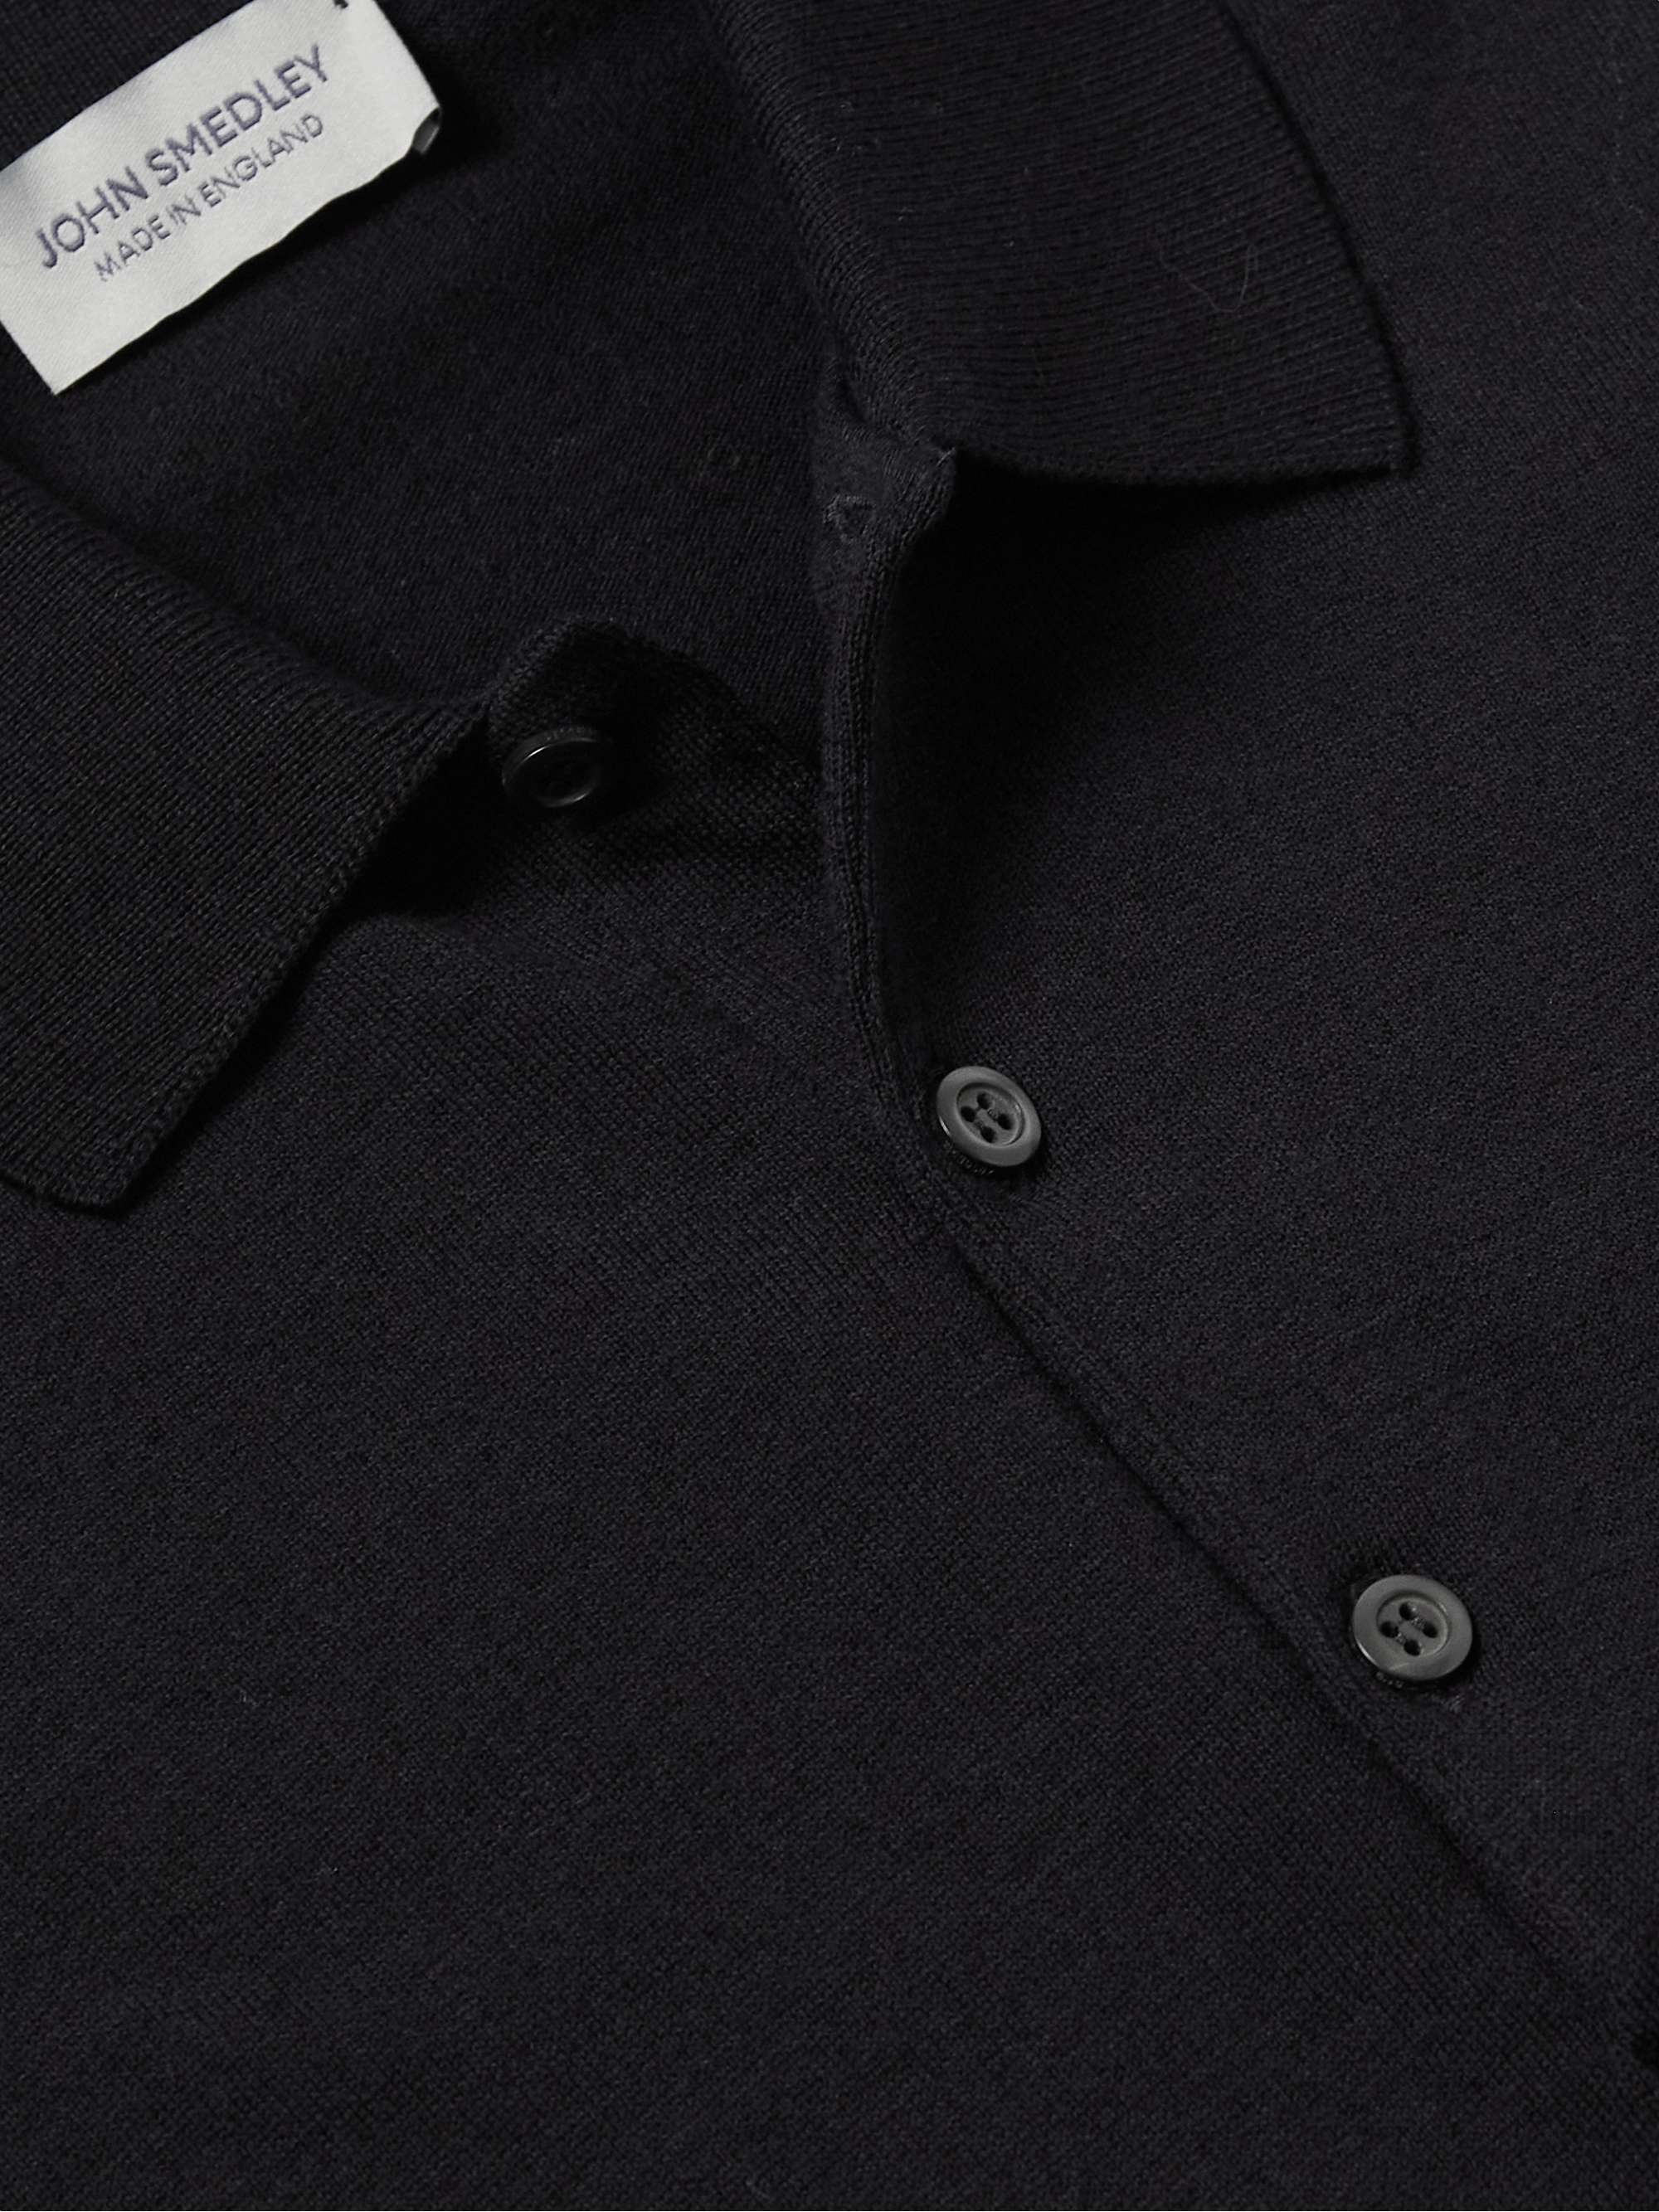 JOHN SMEDLEY Belper Slim-Fit Wool and Cotton-Blend Polo Shirt